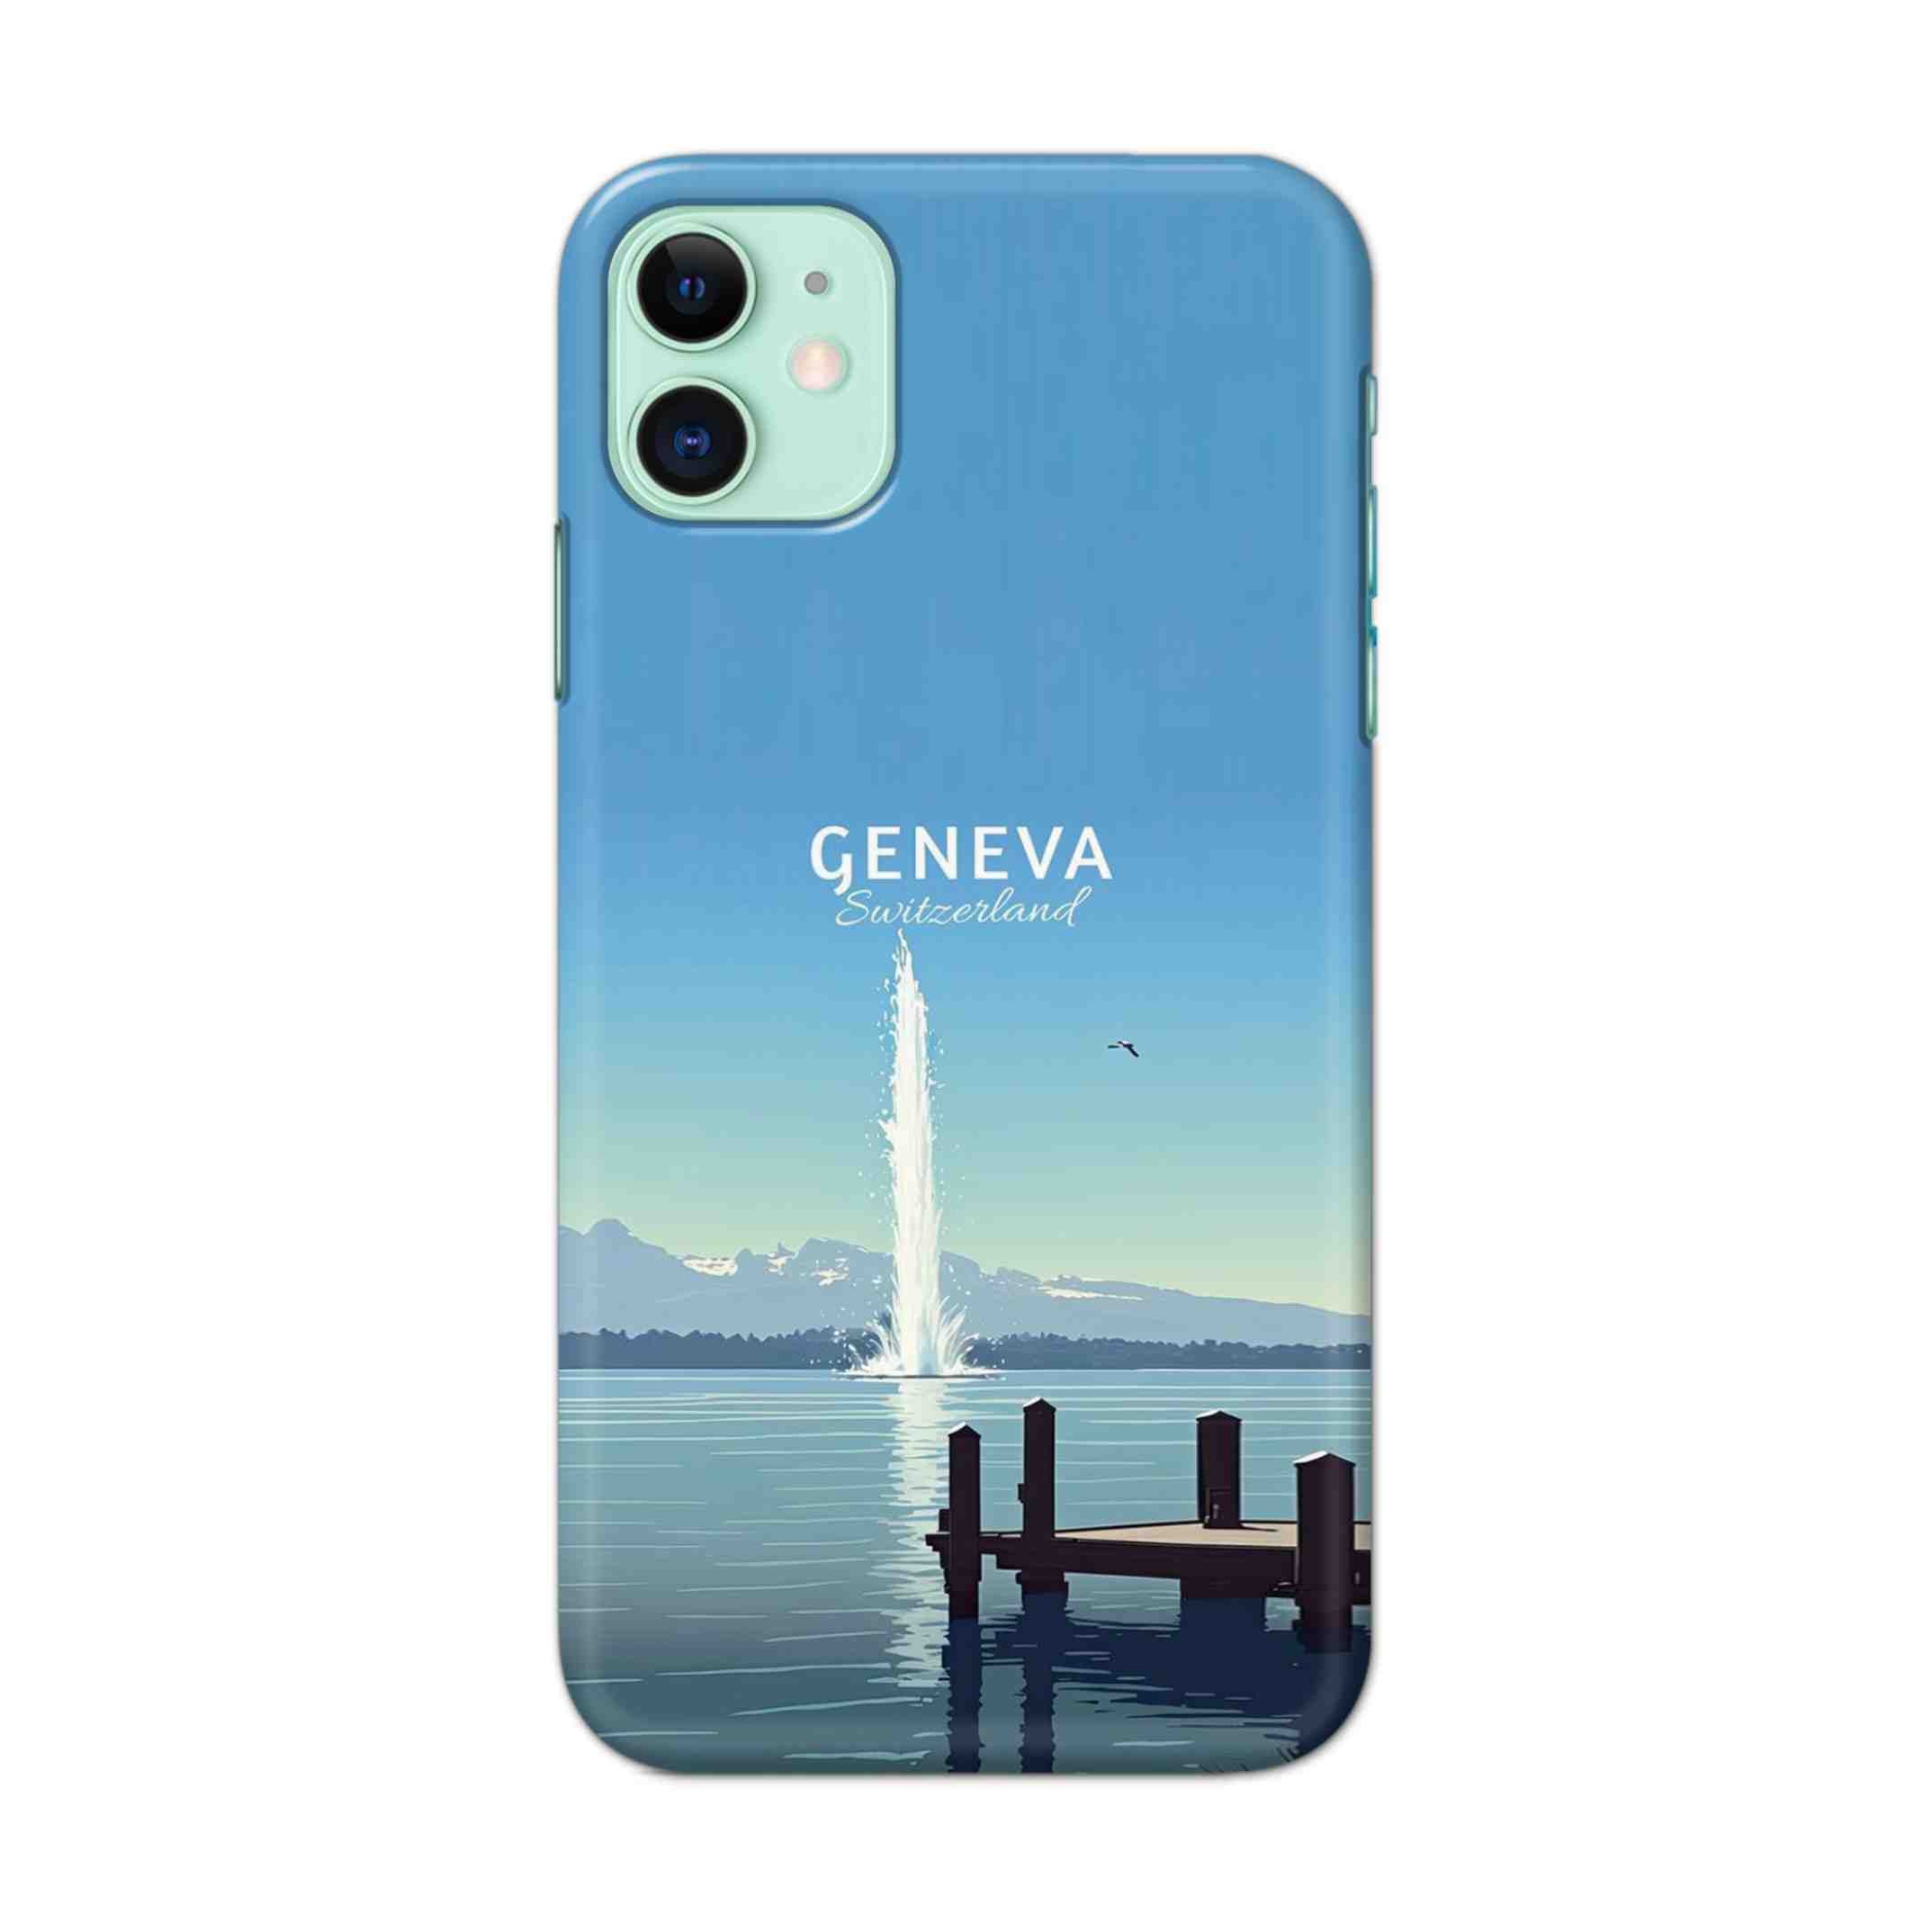 Buy Geneva Hard Back Mobile Phone Case/Cover For iPhone 11 Online